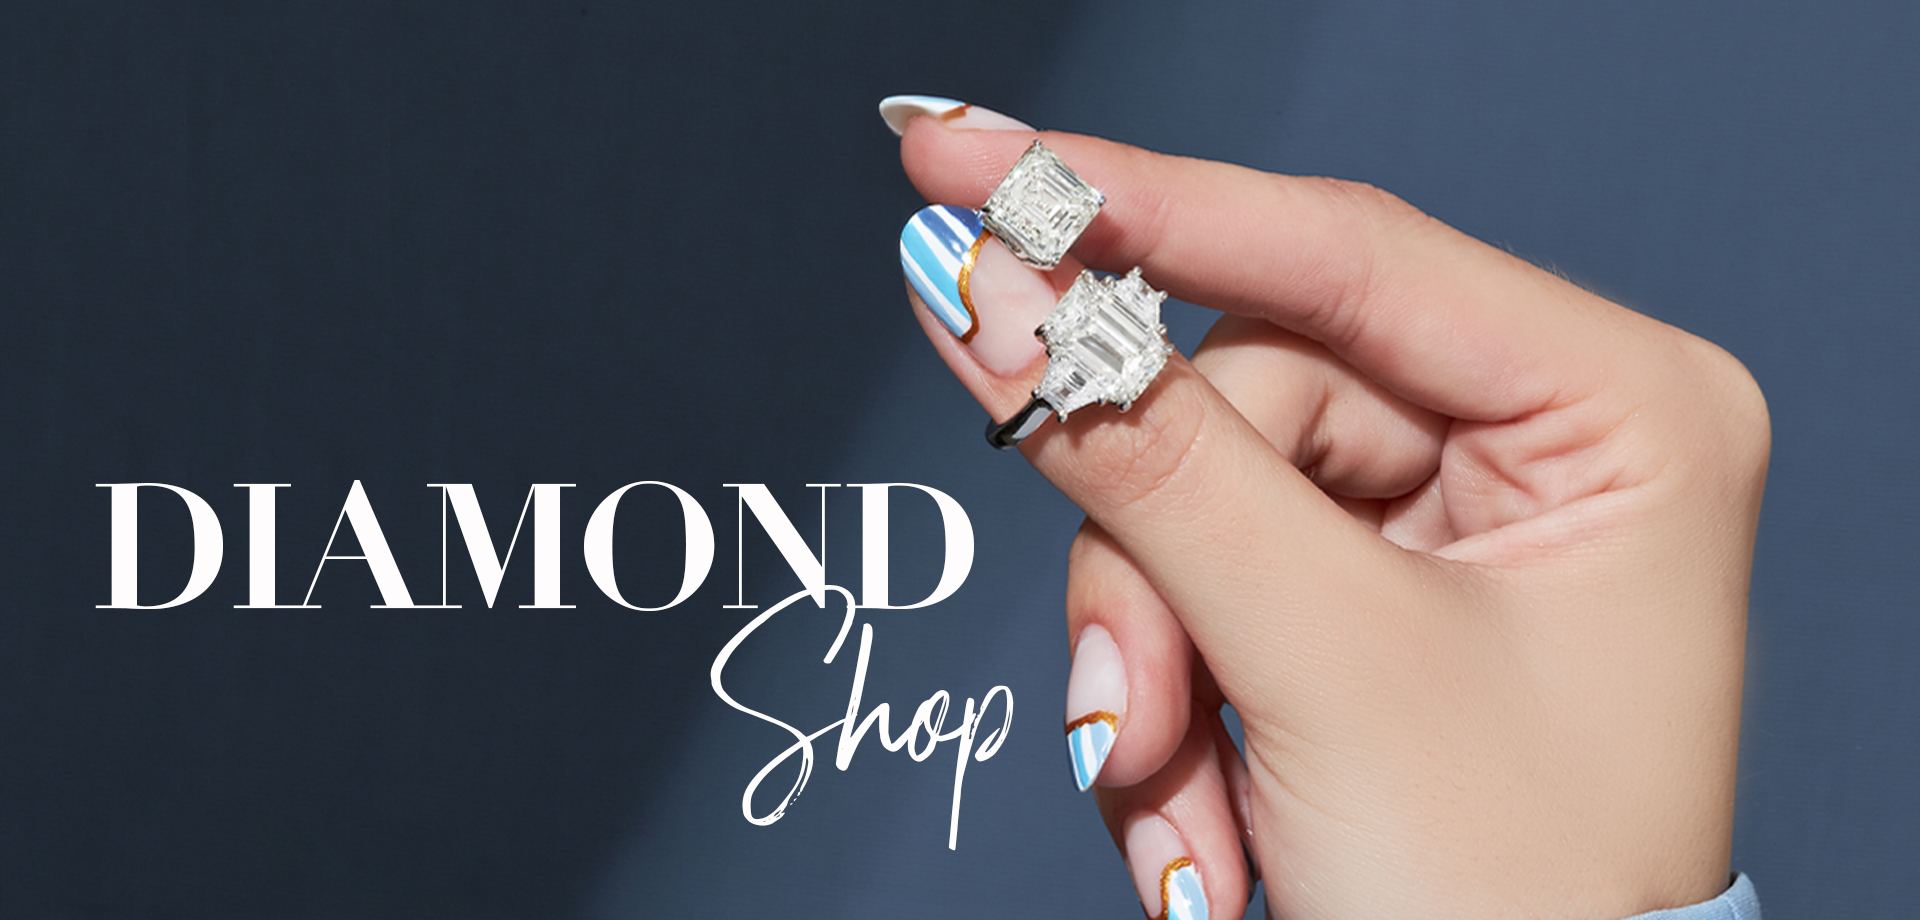 Diamond shop 26.07